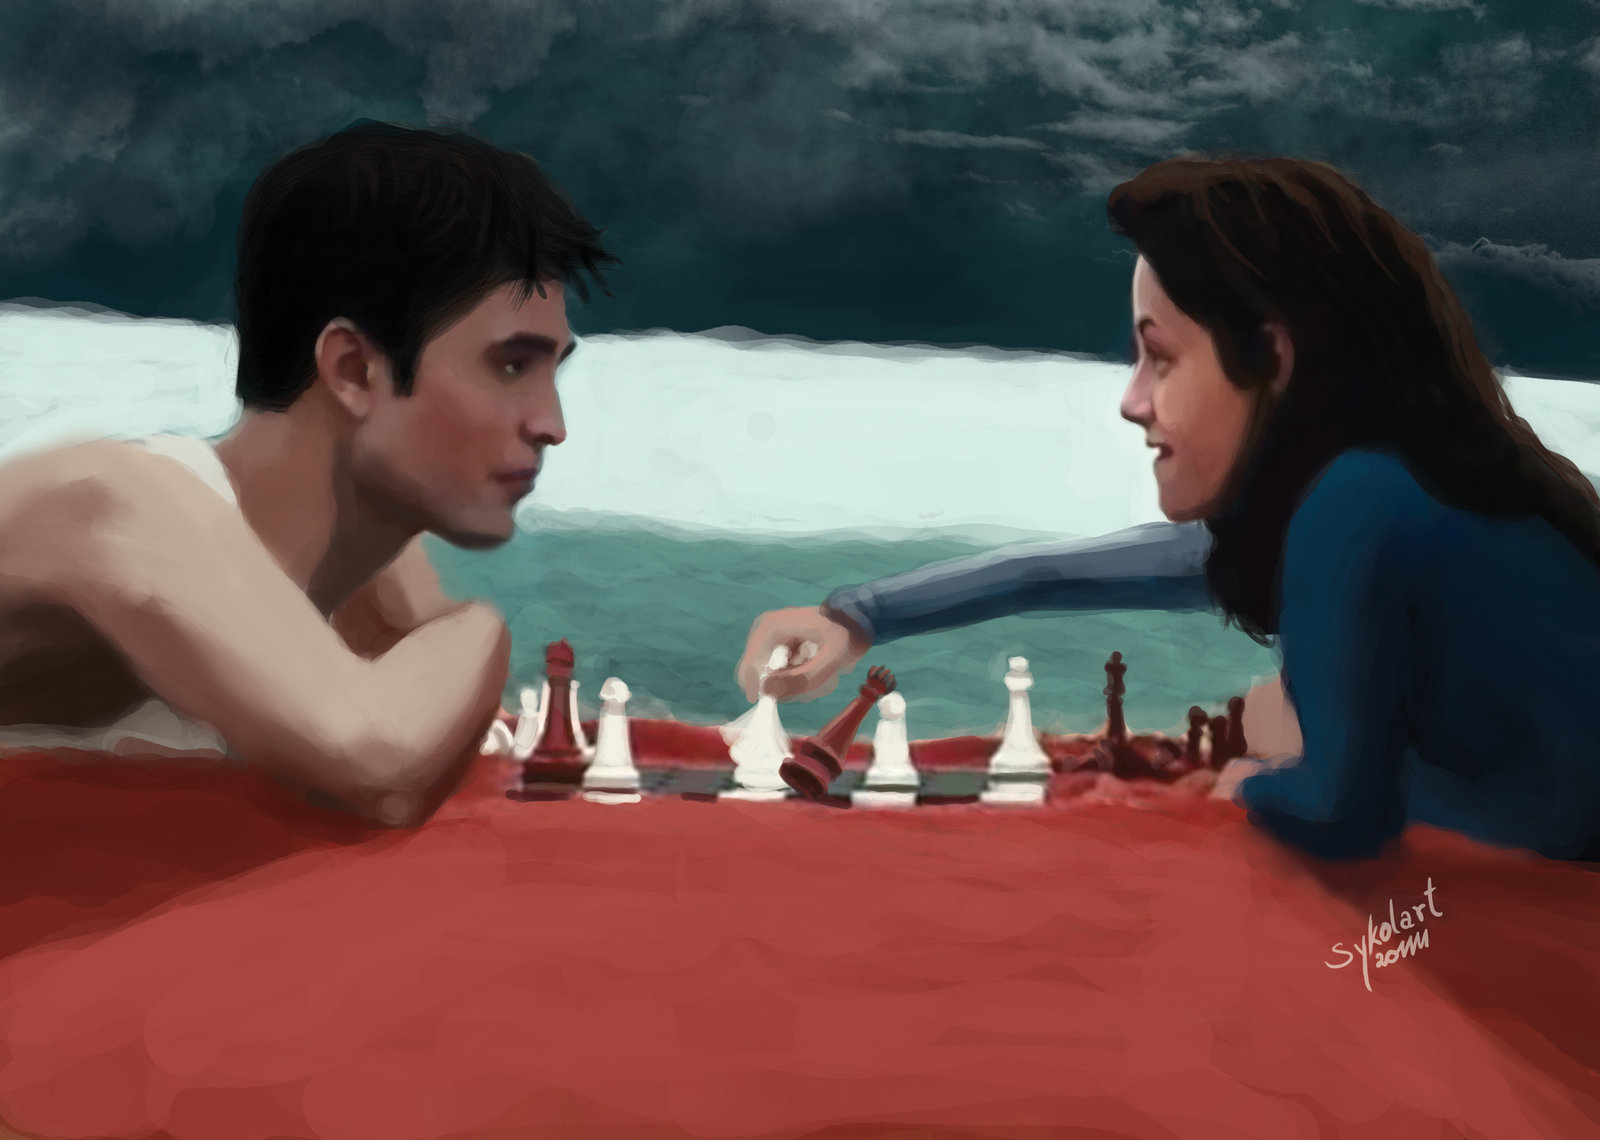 Twilight Edward and Bella love by sykolart